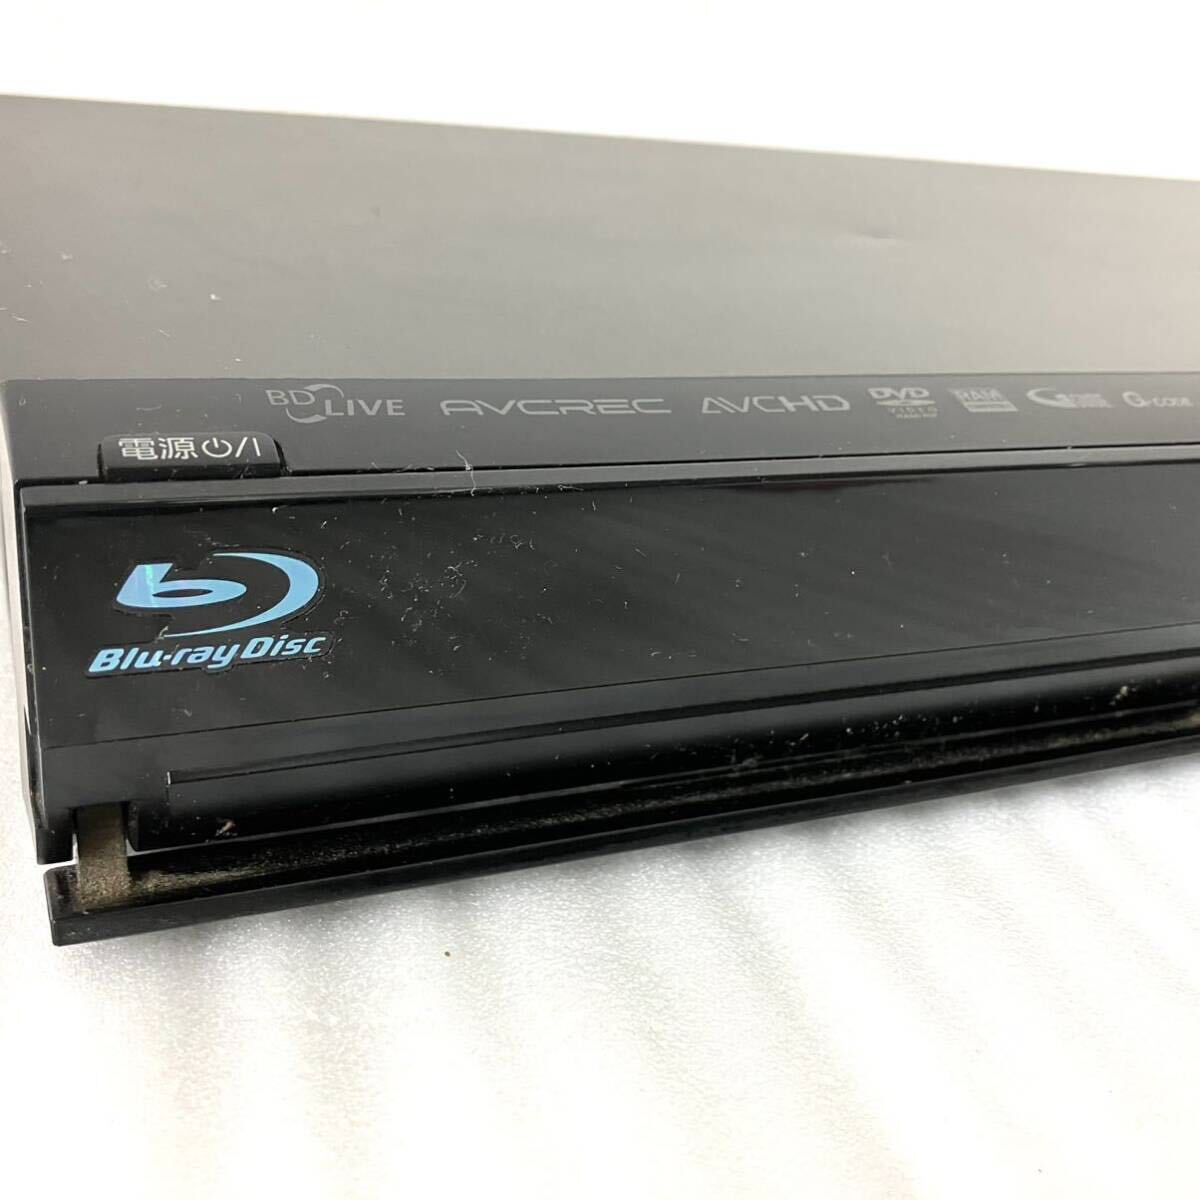 Panasonic パナソニック ブルーレイディスクレコーダー DMR-BR580 BDレコーダー ブルーレイレコーダー Blu-ray